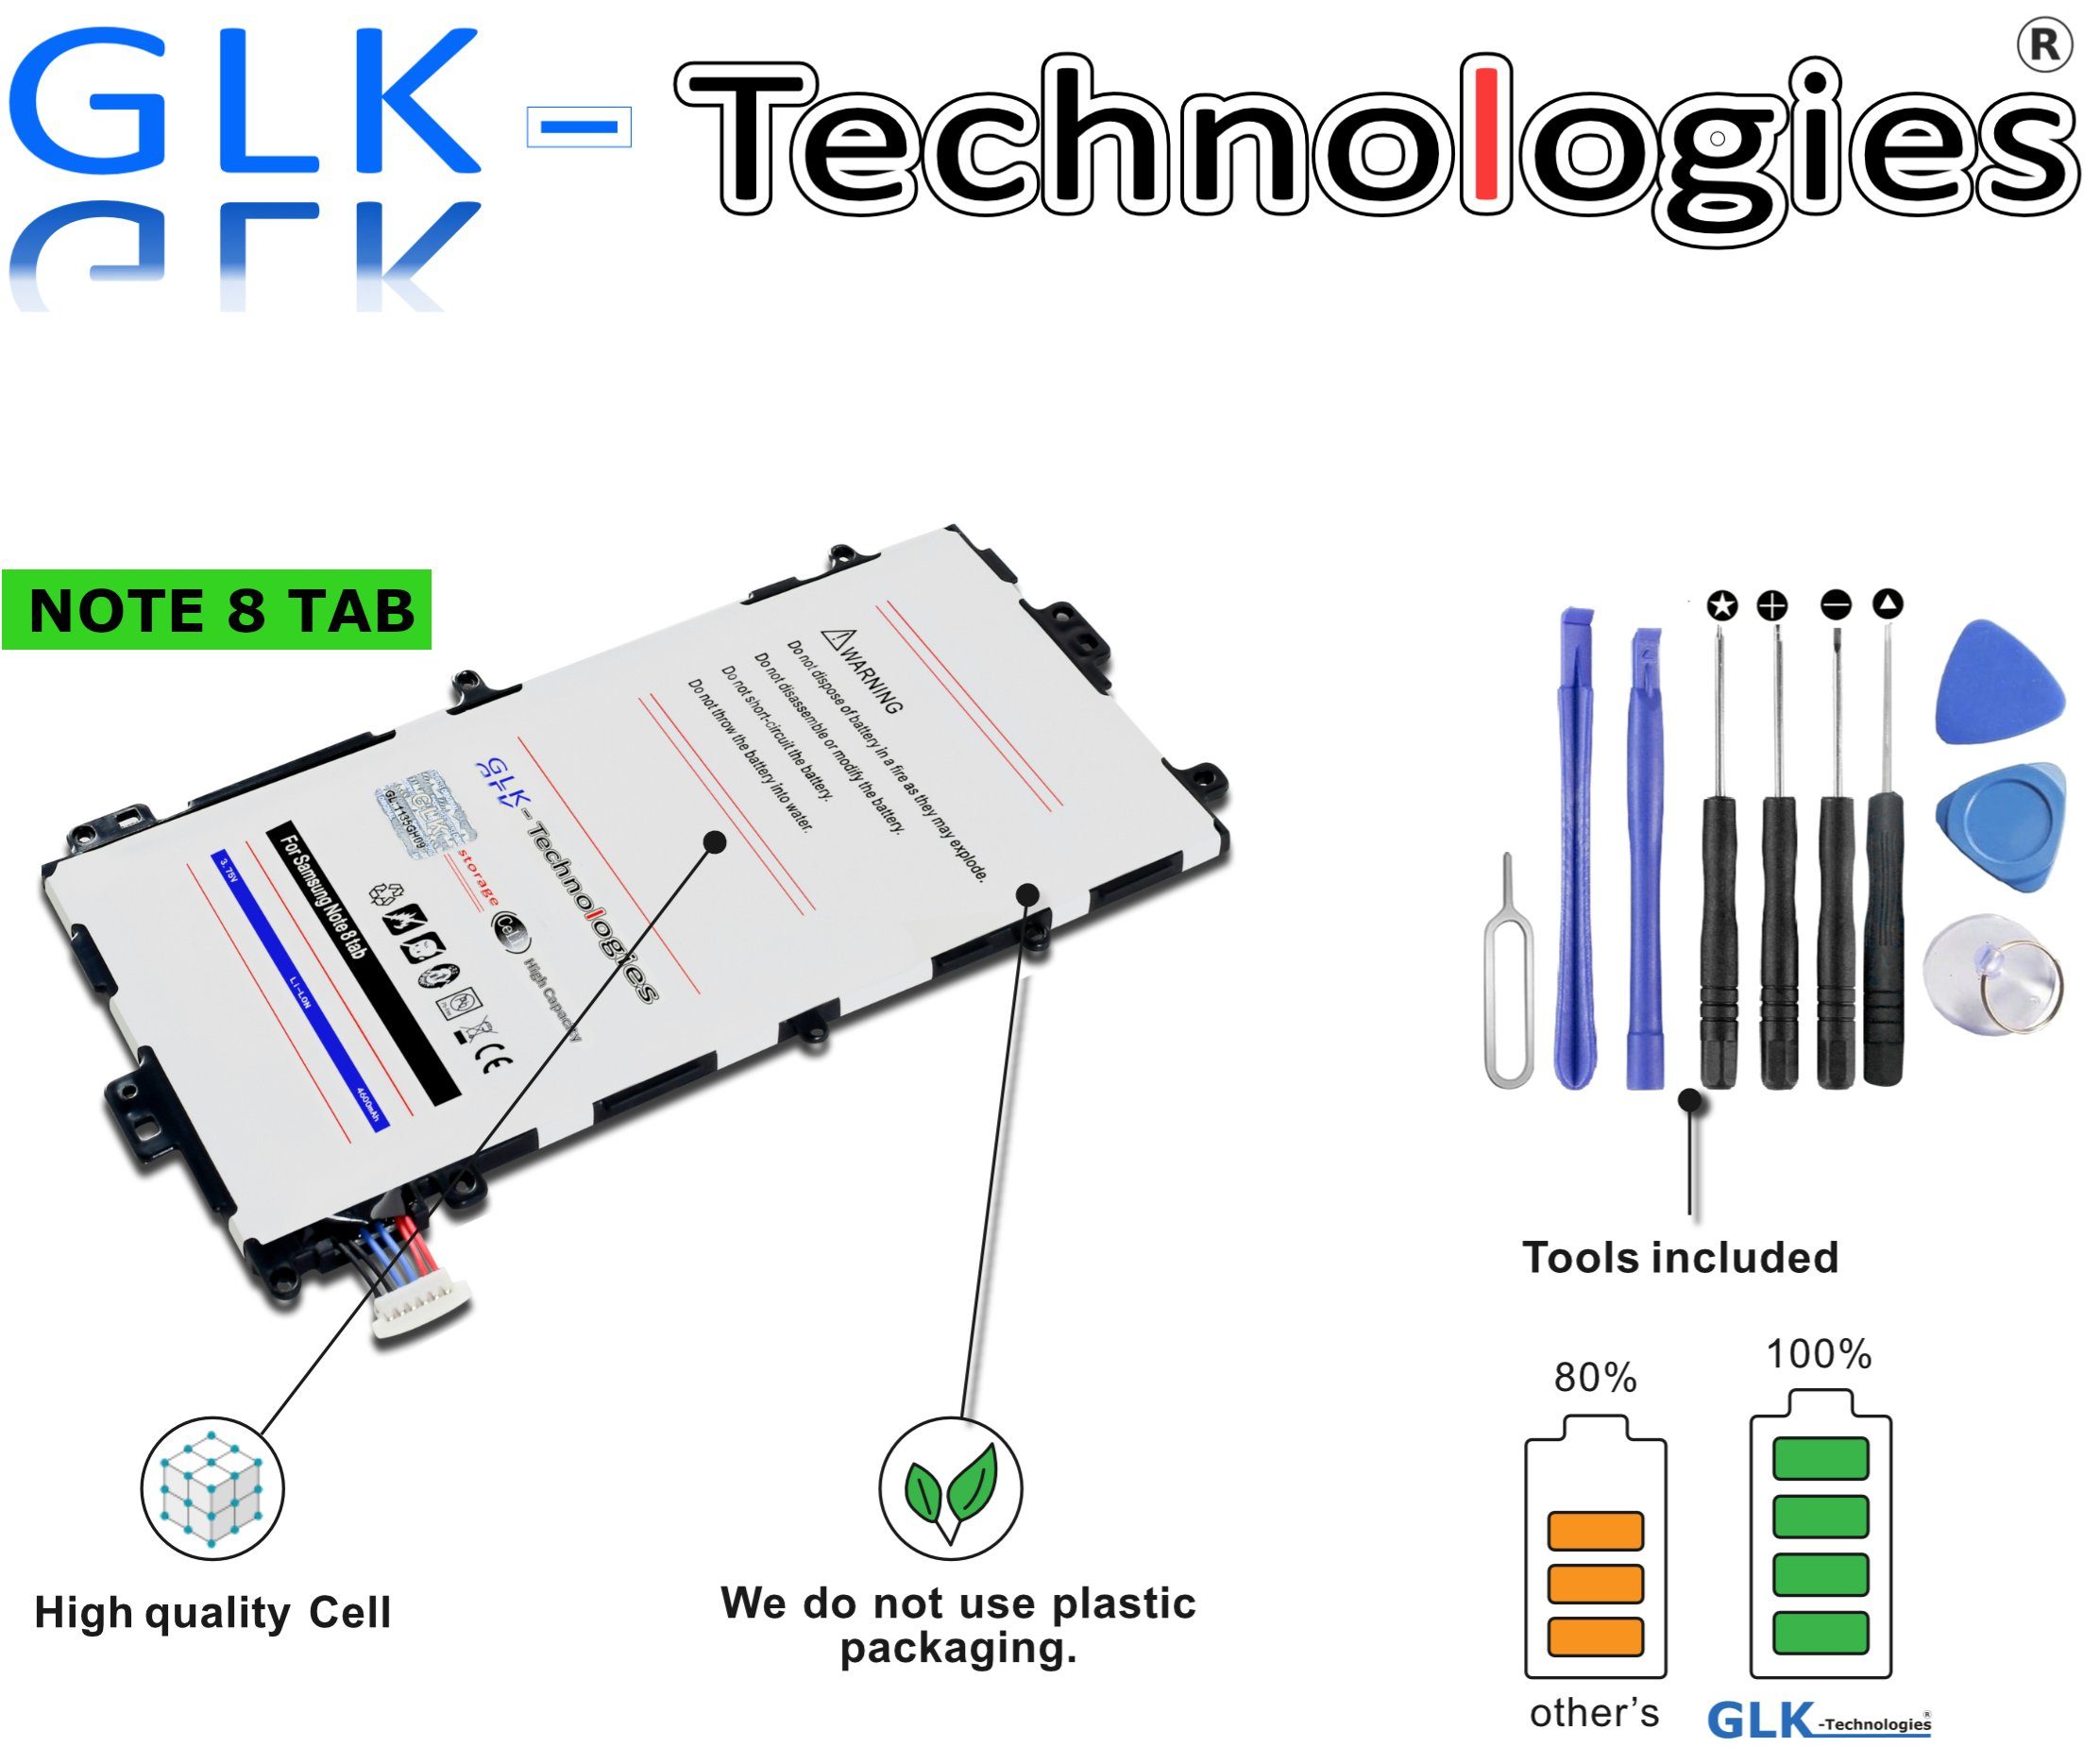 GLK-Technologies High Power Ersatzakku kompatibel mit Samsung Note 8 8.0 SP3770E1H N5110 N5100 N5120 N5110 sgh-i467, Original GLK-Technologies Battery, accu, 4600mAh Akku, inkl. Werkzeug Set Kit NEU Tablet-Akku 4600 mAh (3.8 V)